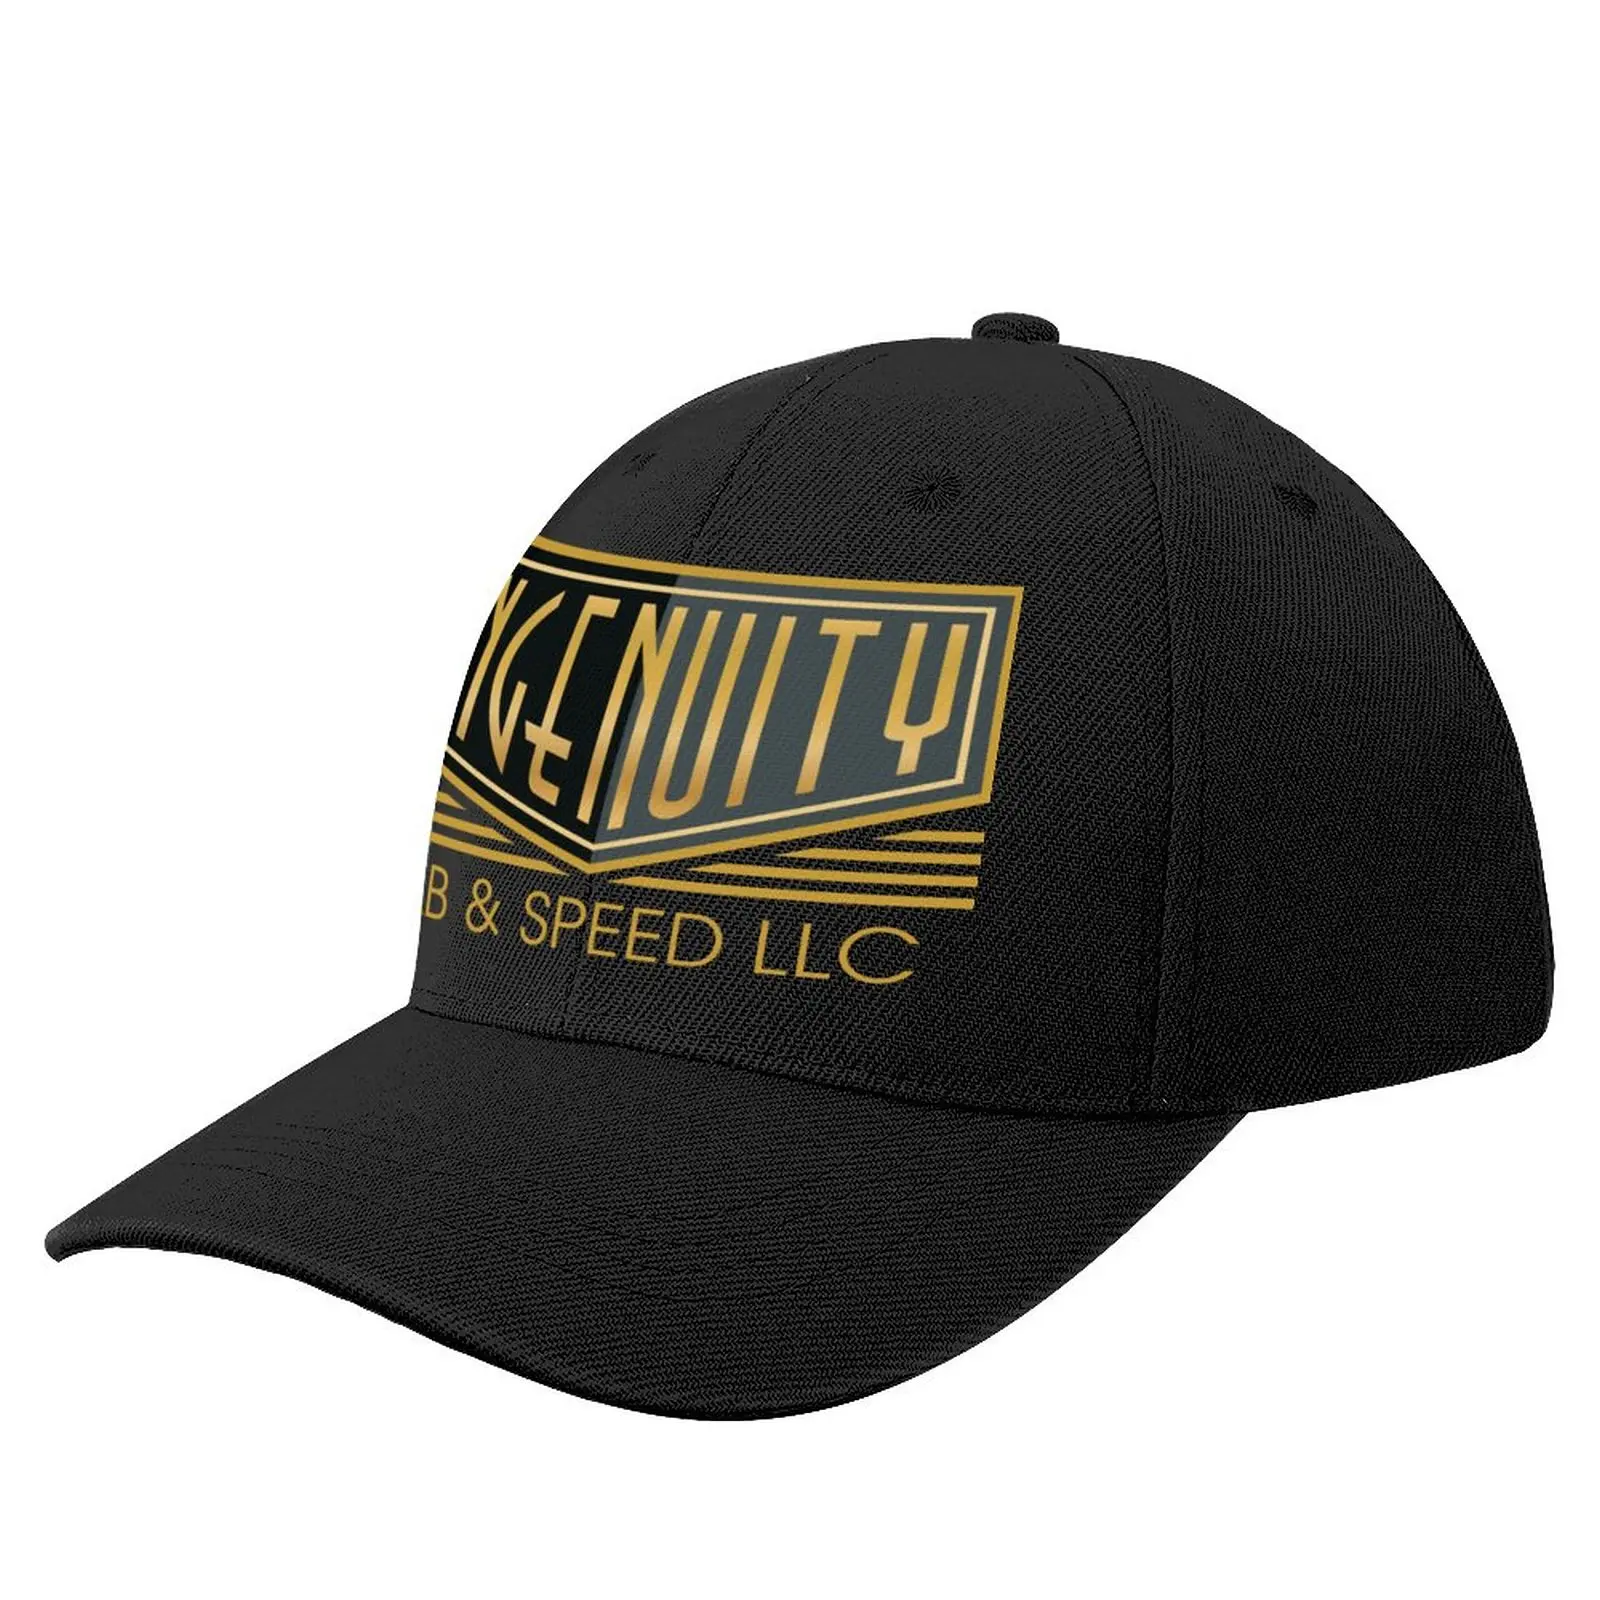 

Ingenuity Fab & Speed hot rod shop Baseball Cap fishing hat Caps Trucker Cap Cap Female Men'S